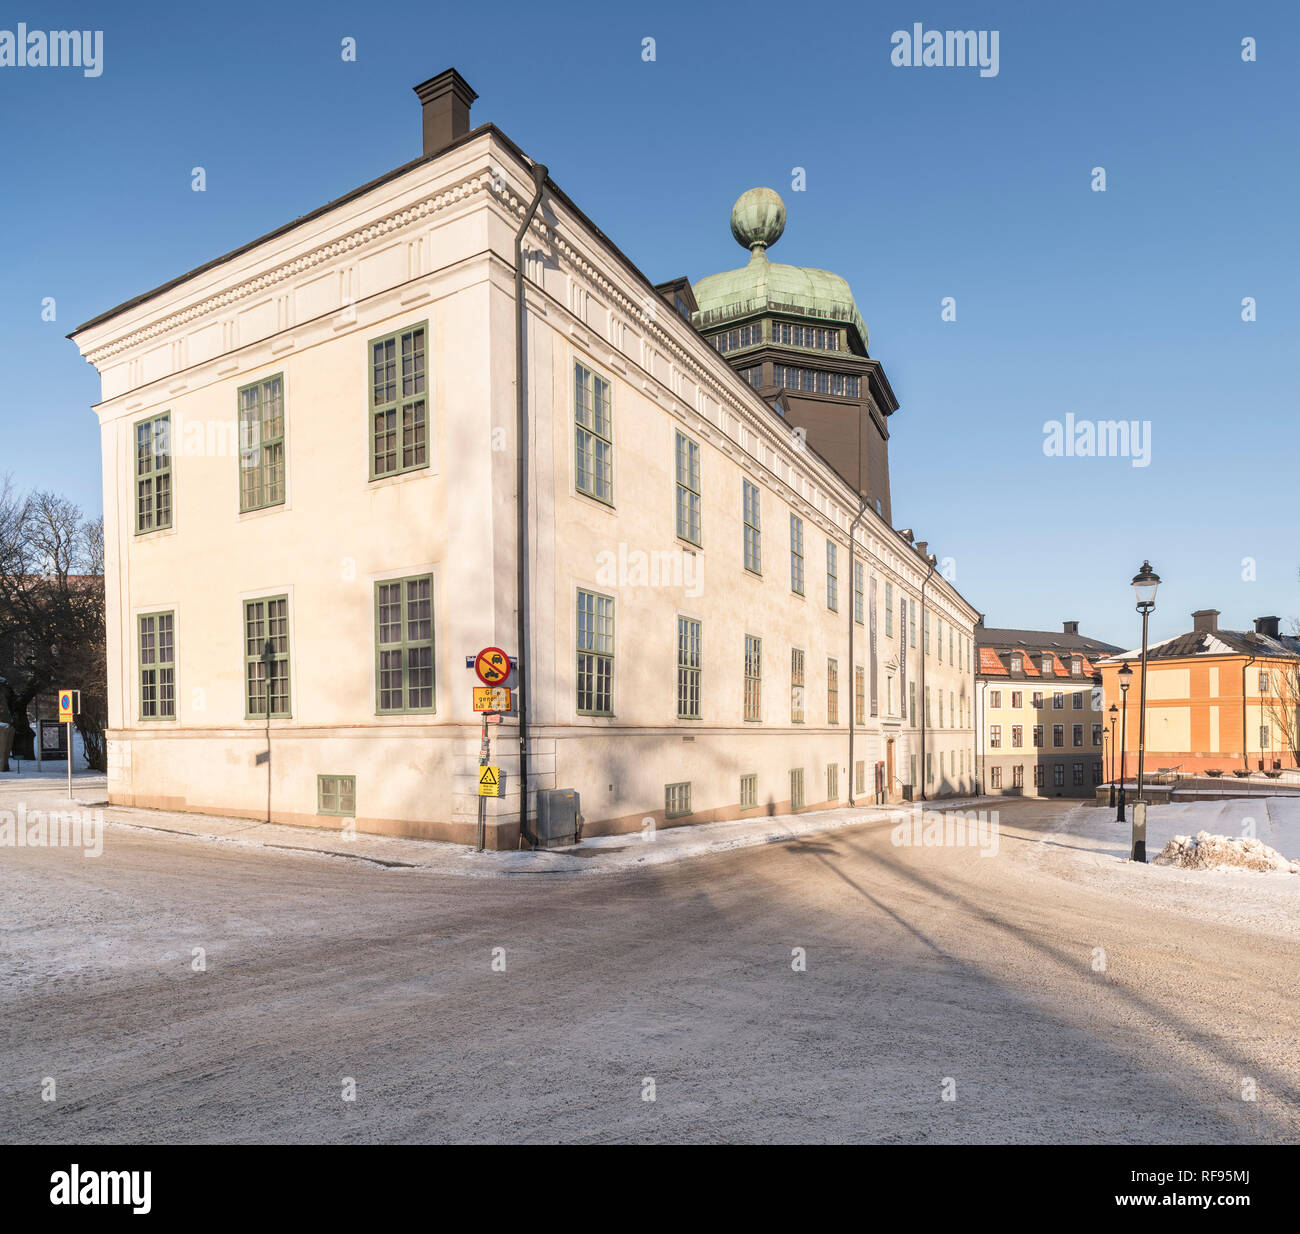 Gustavianum, Uppsala. Sweden, Scandinavia. Stock Photo